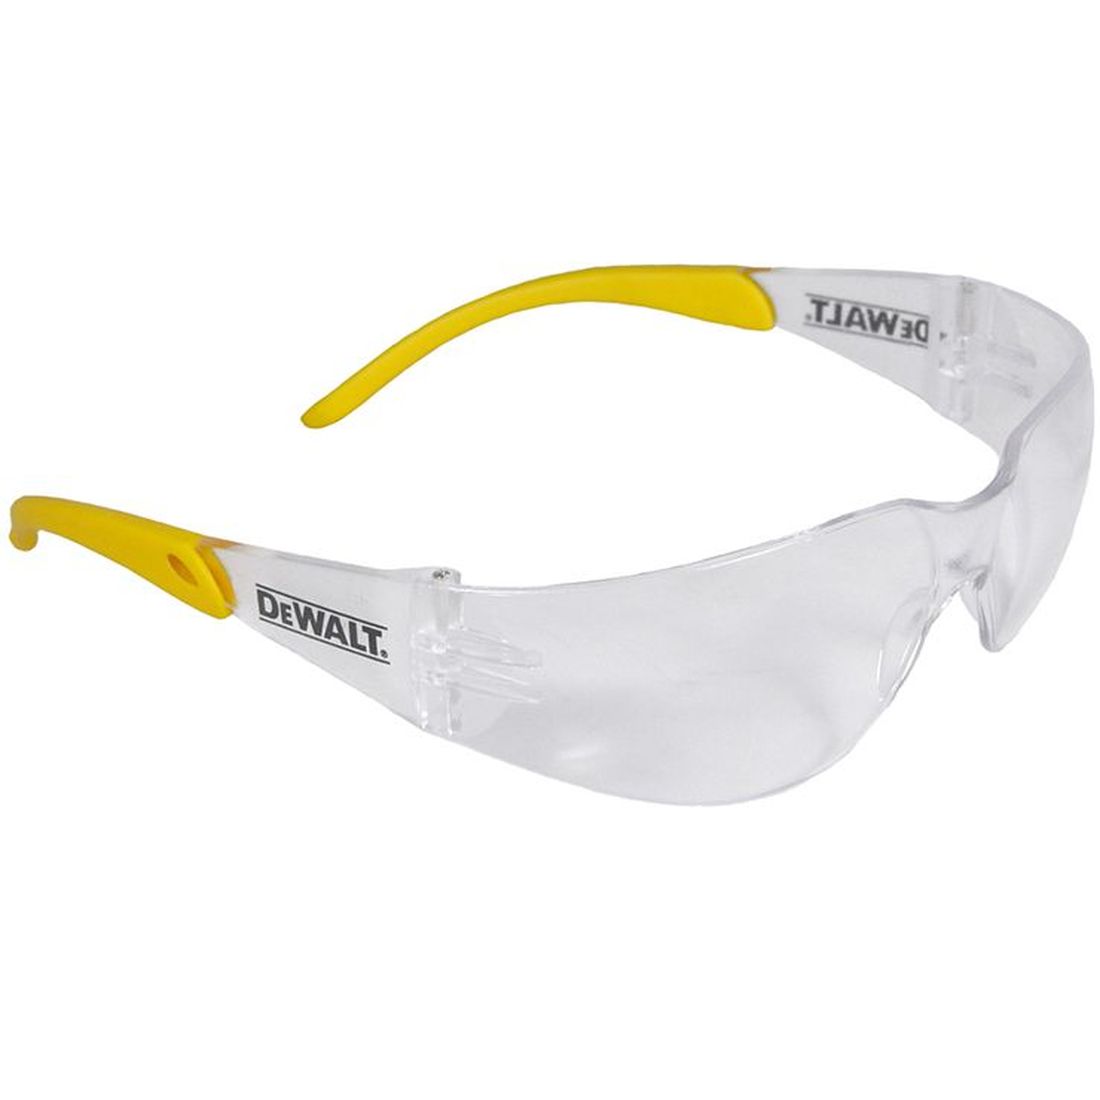 DEWALT Protector Safety Glasses - Clear 